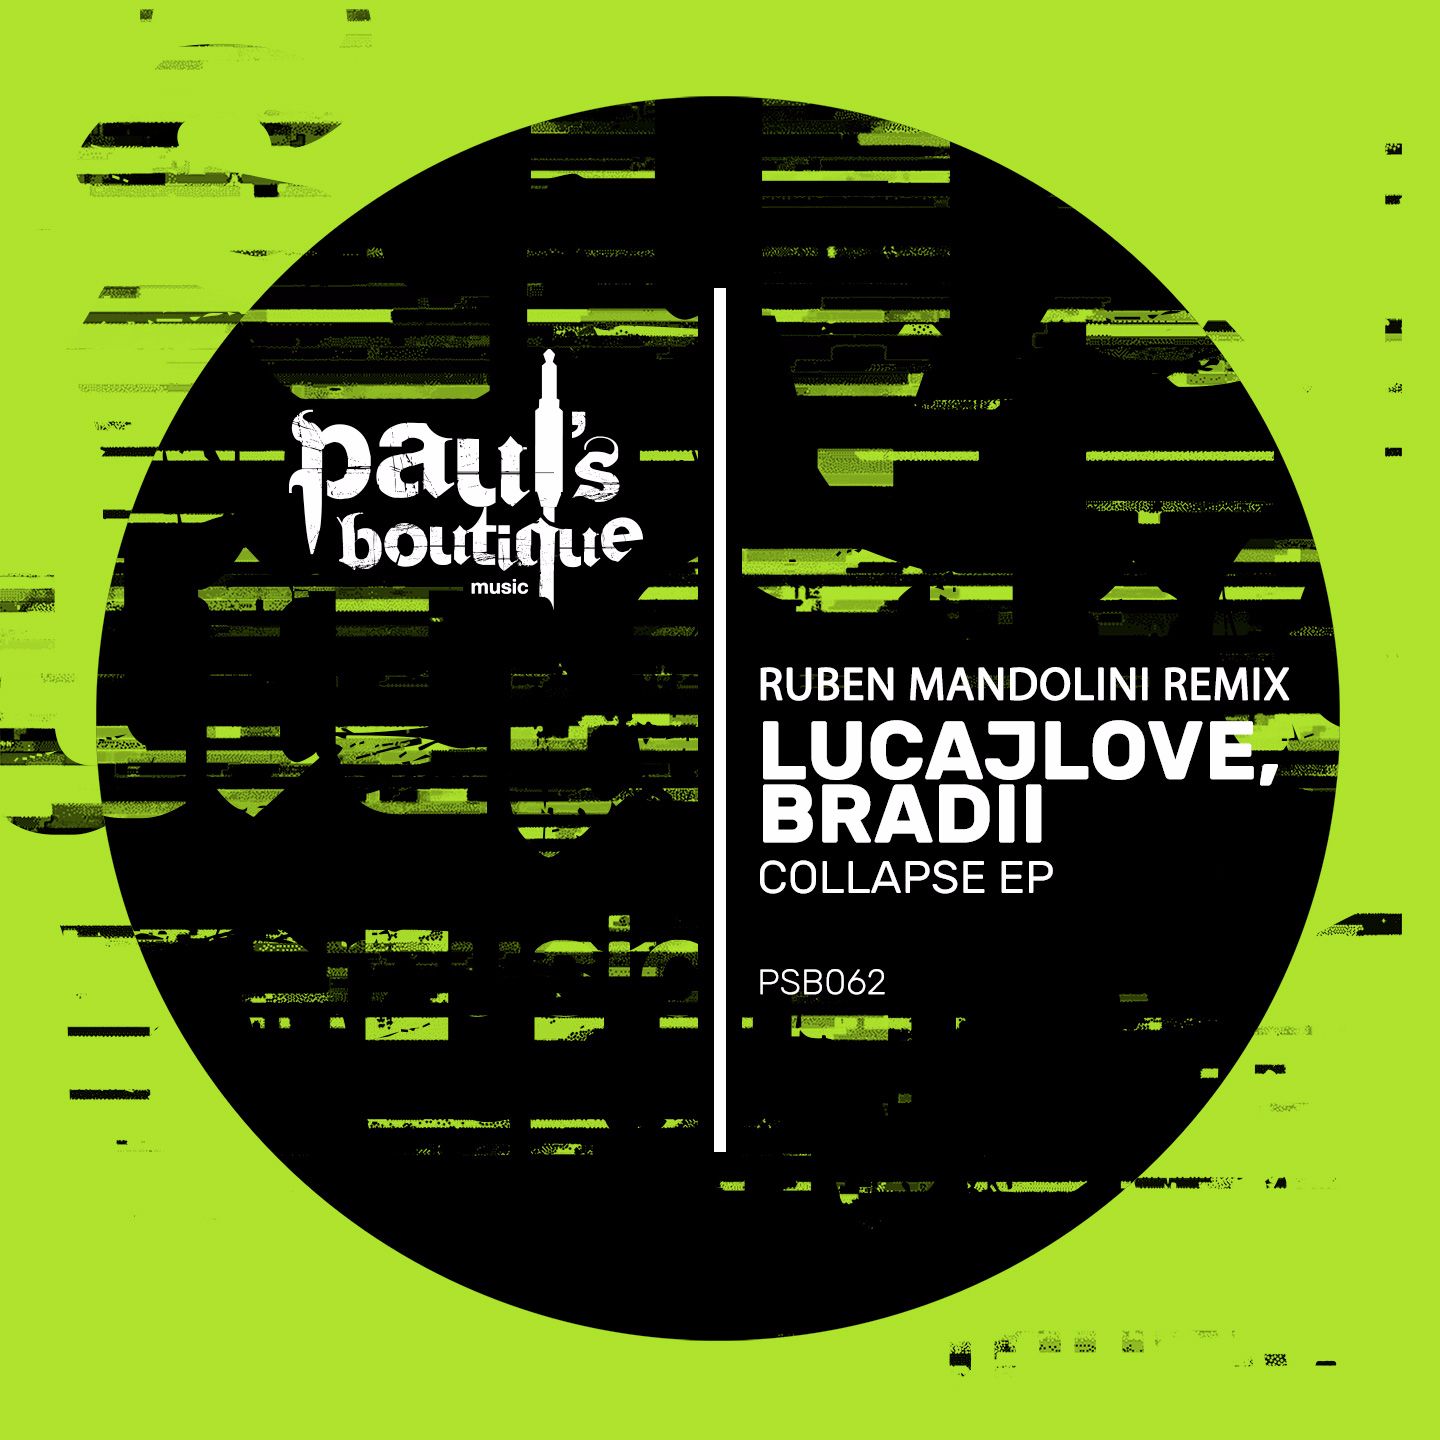 Hent LucaJLove, Bradii - Who Really Knows (Ruben Mandolini Remix)  [Paul's Boutique]